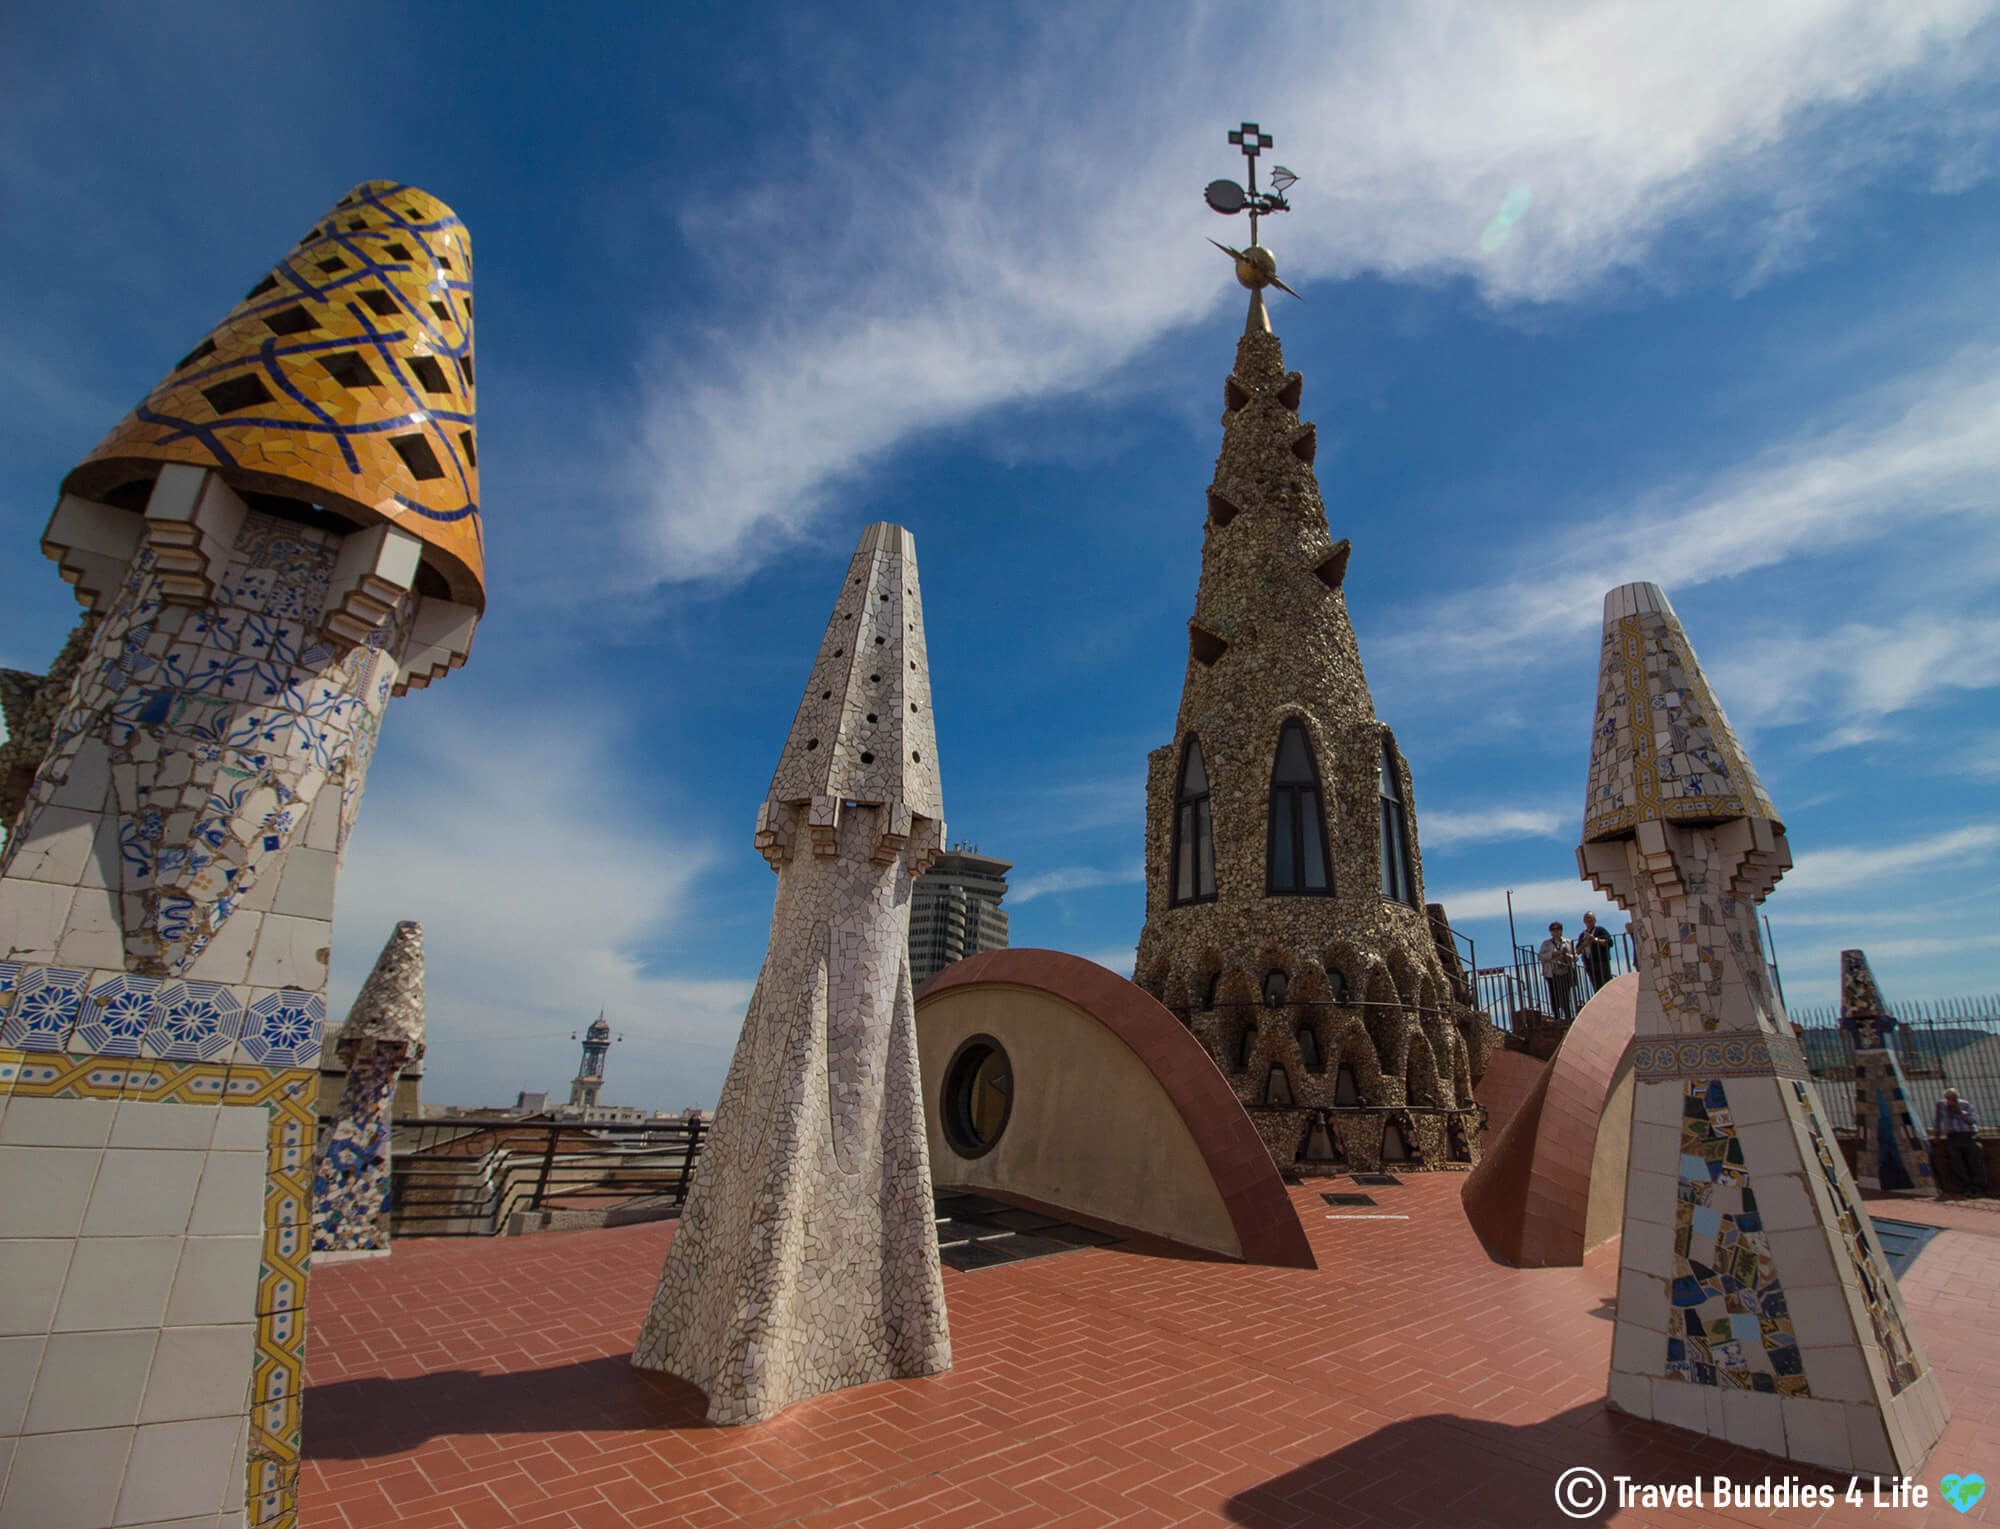 The Doctor Seuss Like Buildings in Barcelona, Made by Gaudi, Spain, Europe